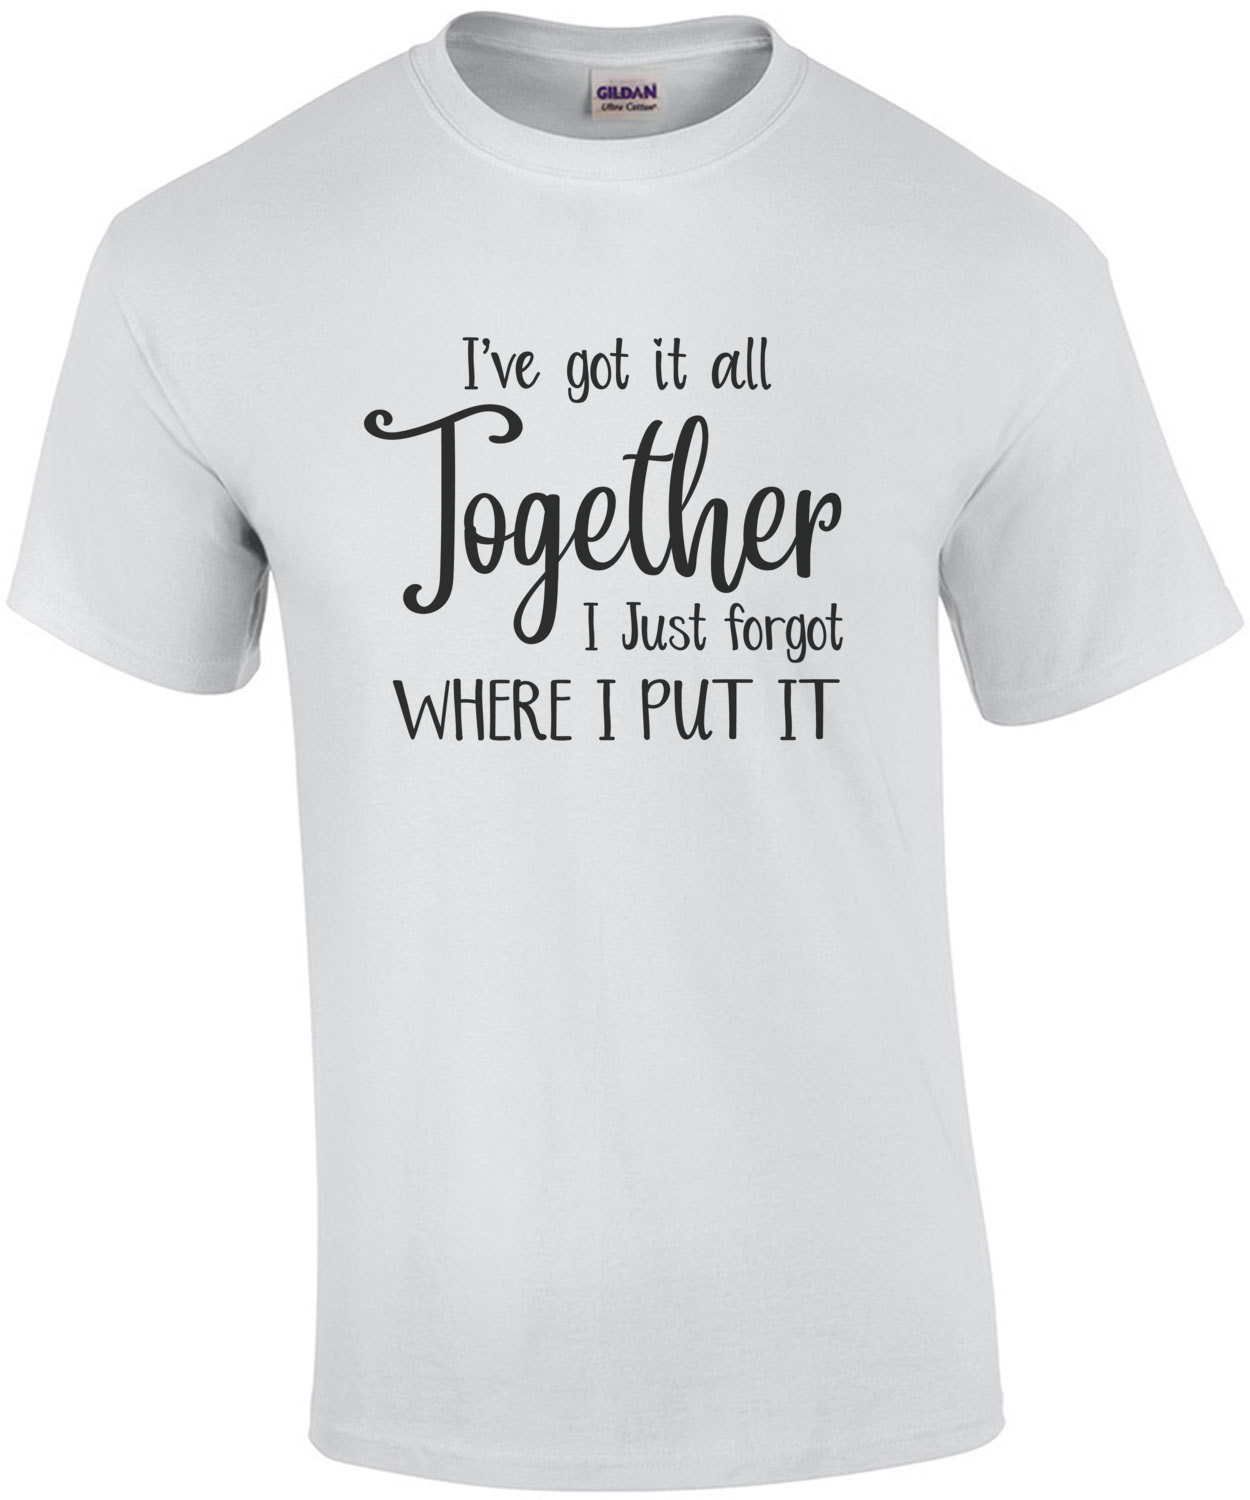 I've got it all together - I just forgot where I put it - Funny T-Shirt